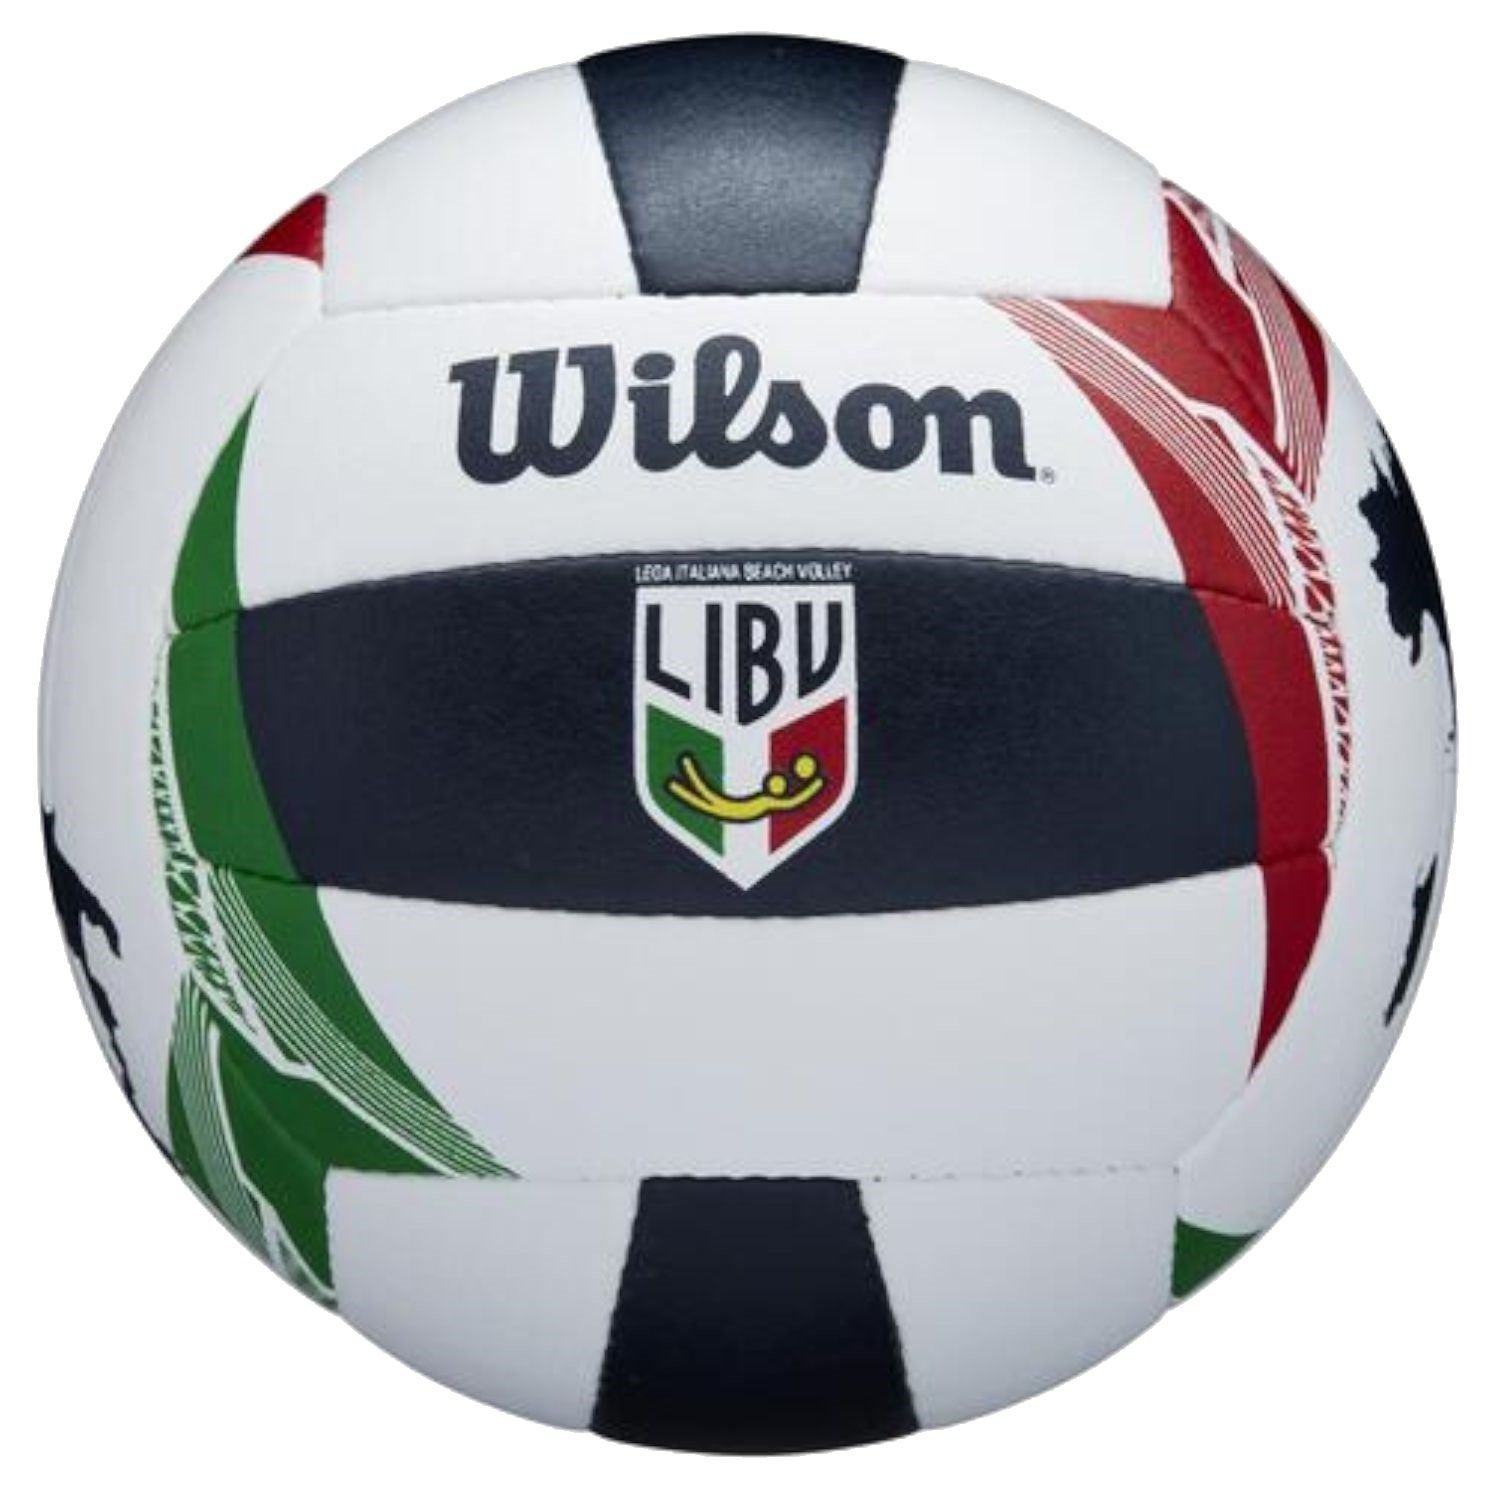 Wilson Italian League Official Game Ball